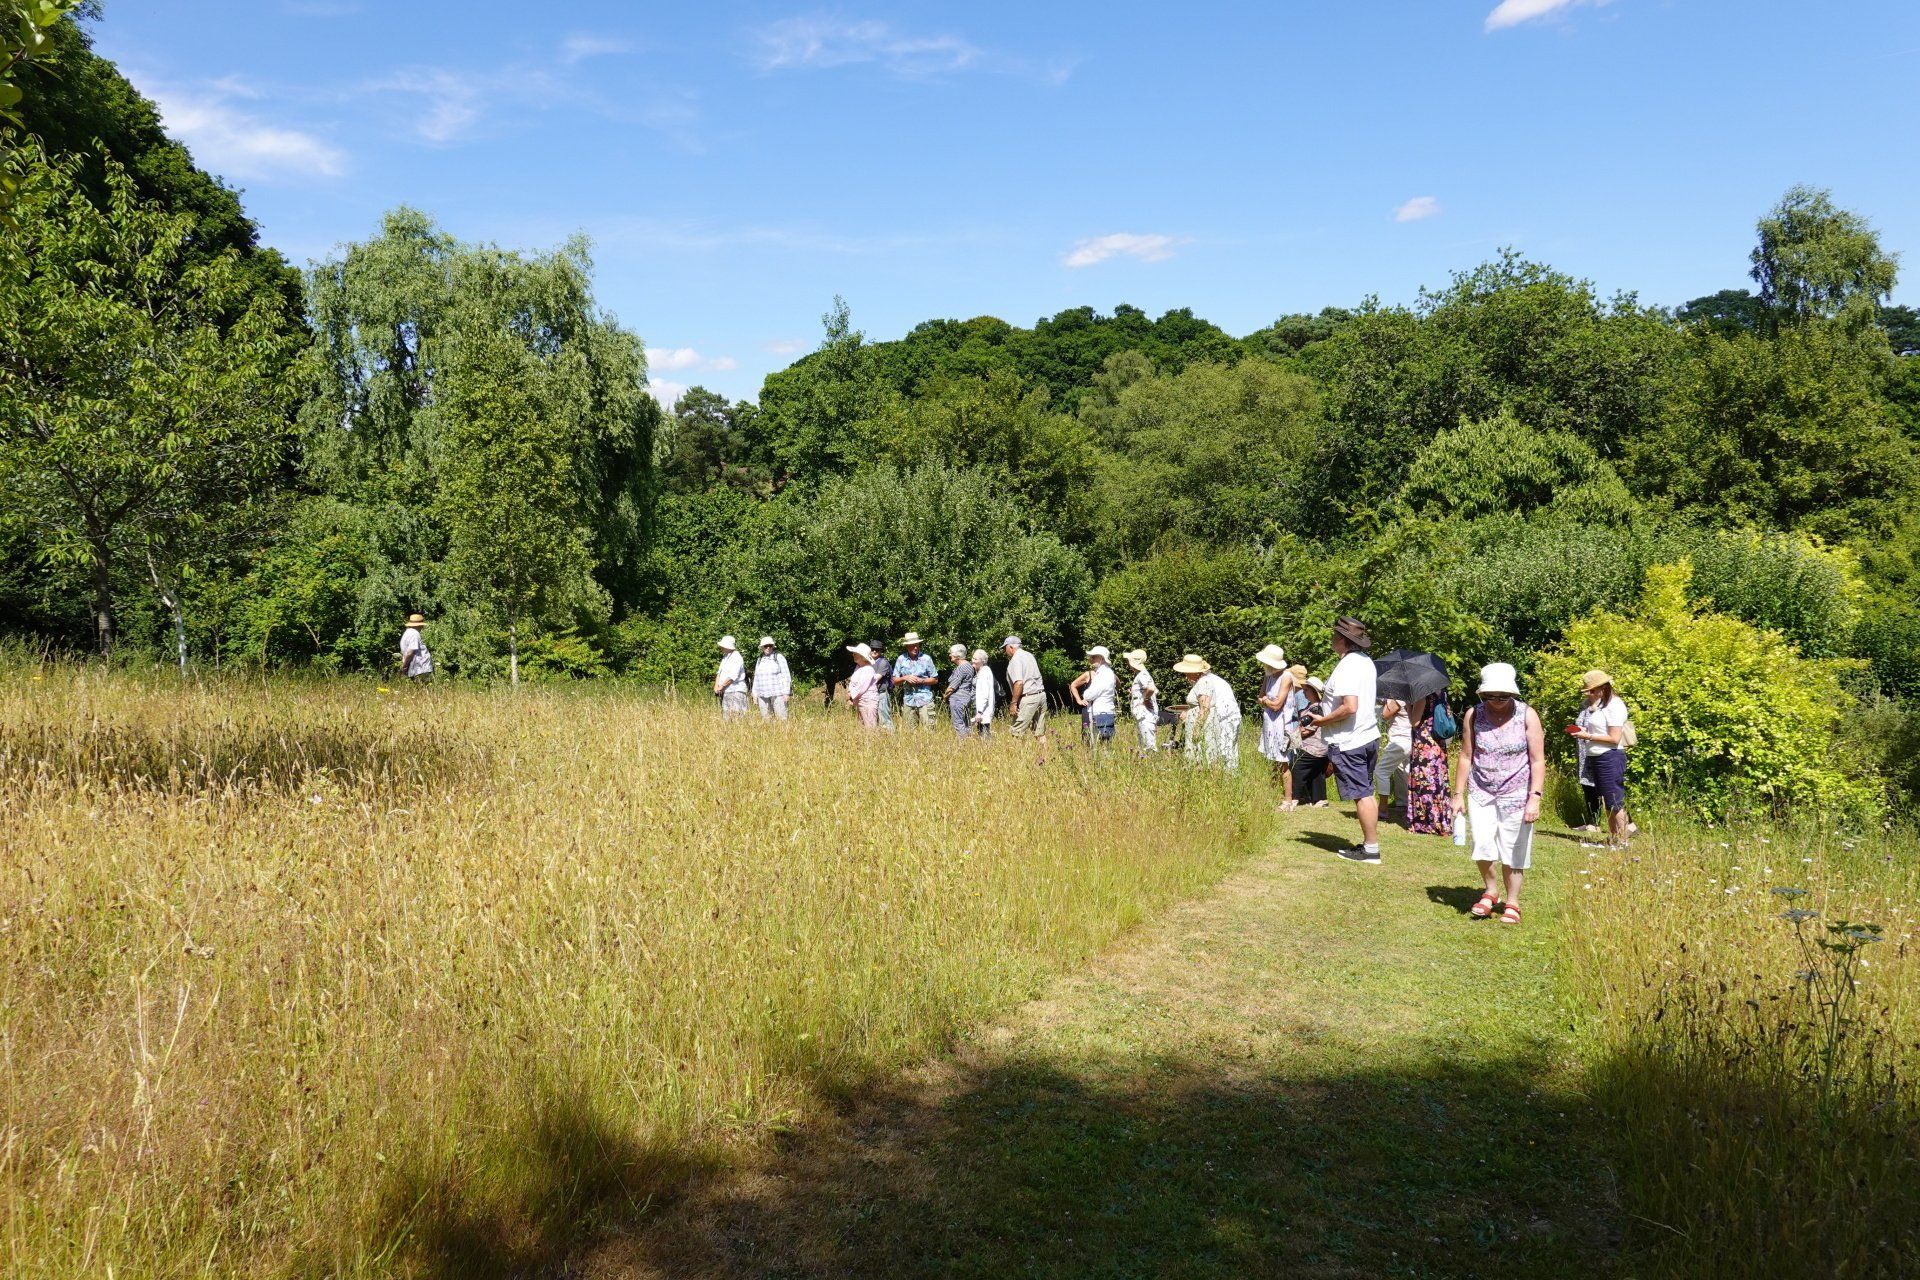 Members admire the meadow